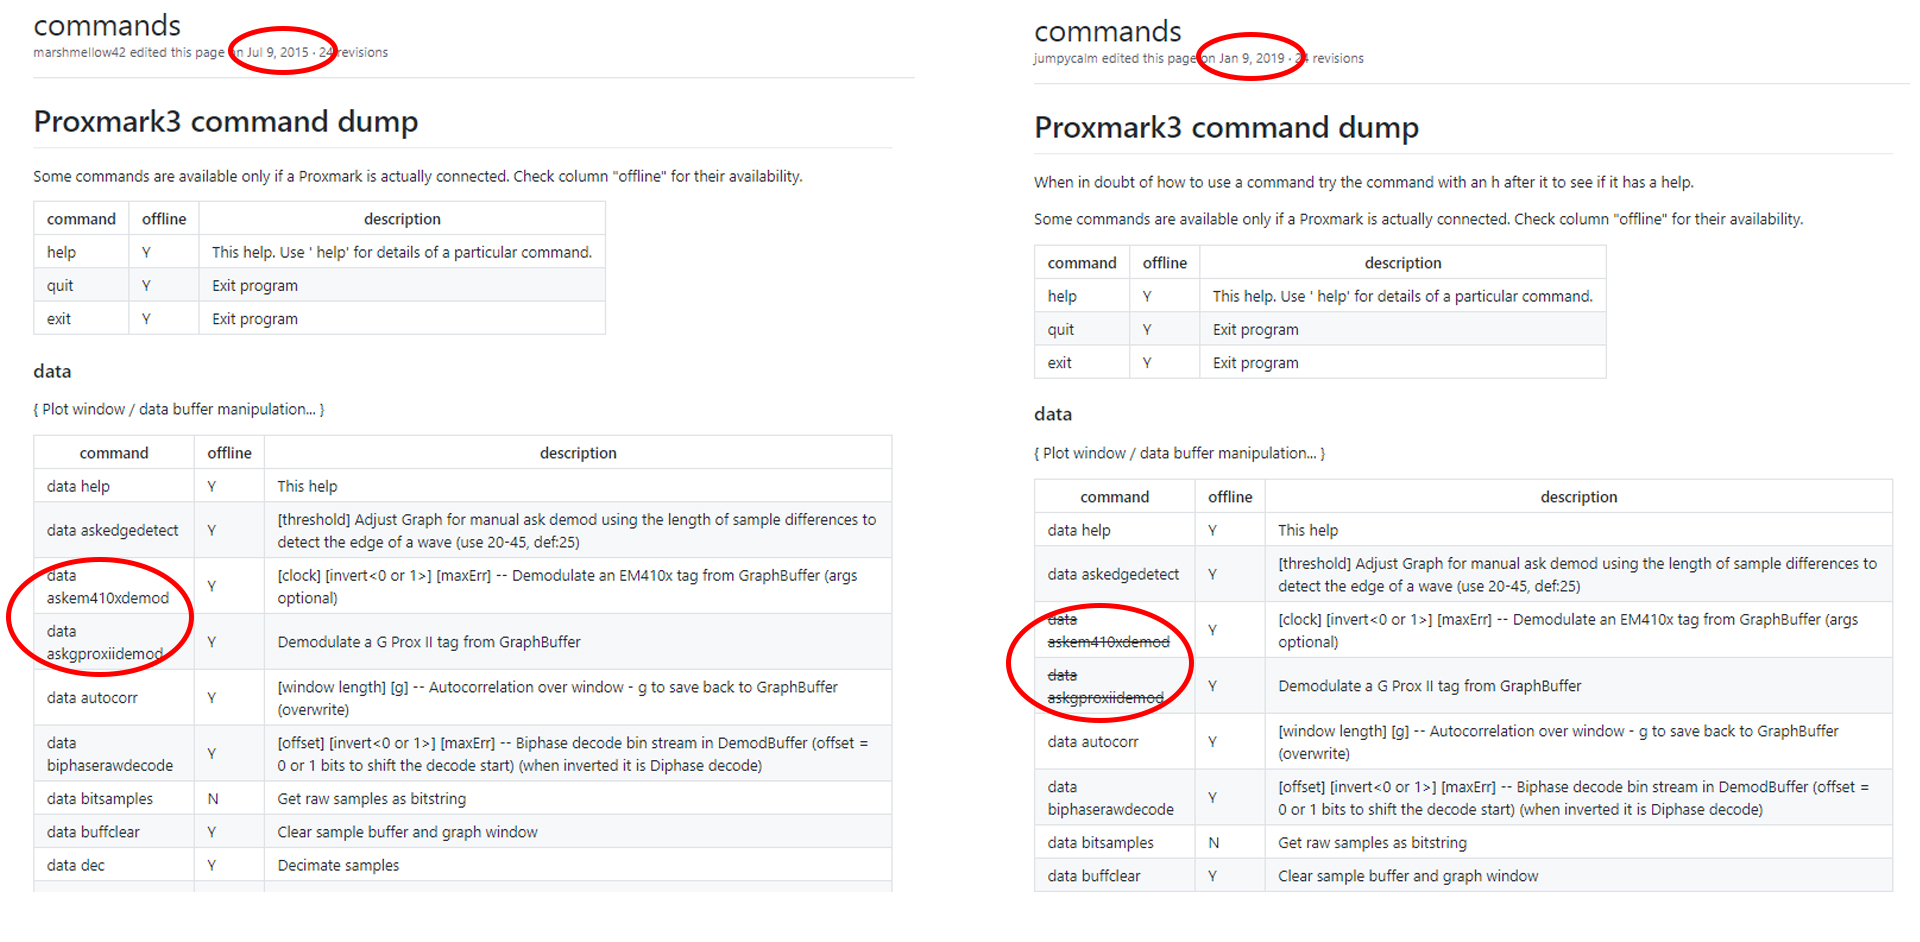 Proxmark Pro Command Dump Compared to Current Promark3 Wiki